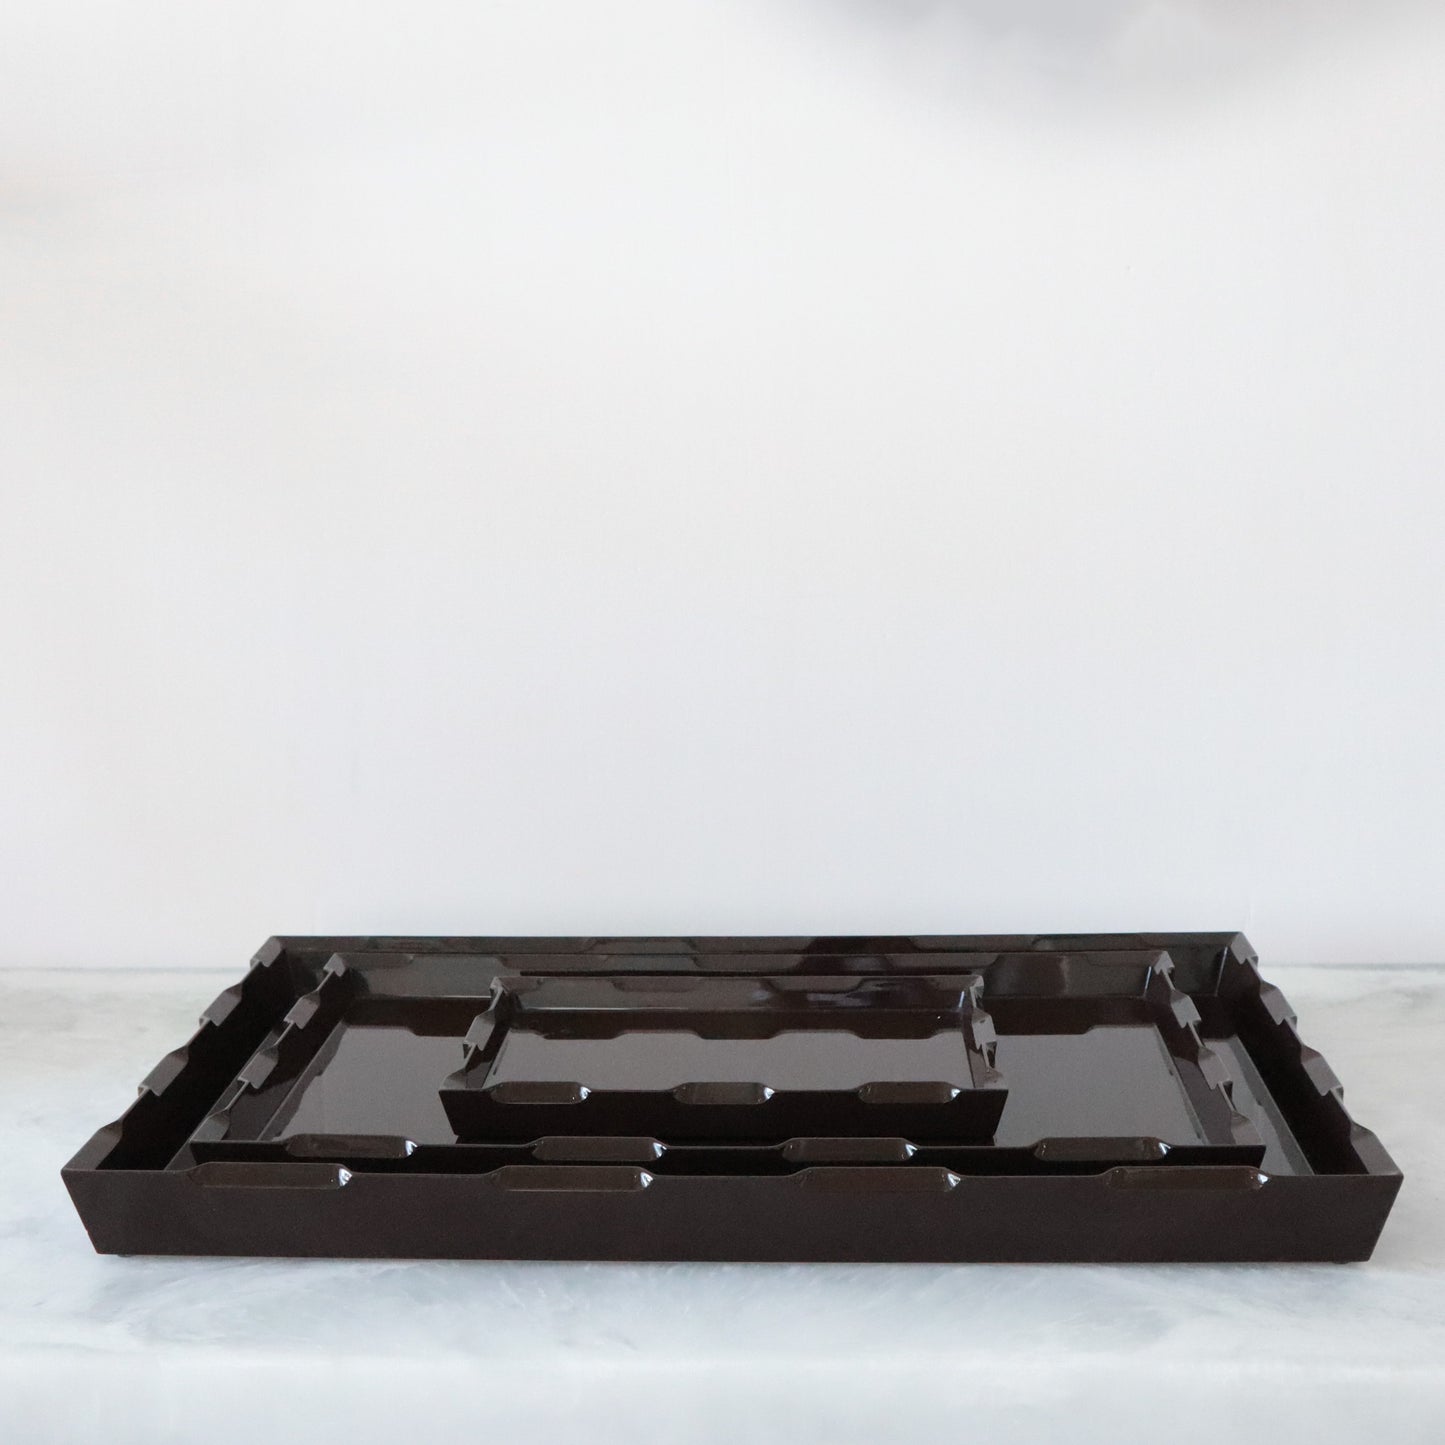 Large Denston Tray - Chocolate Brown